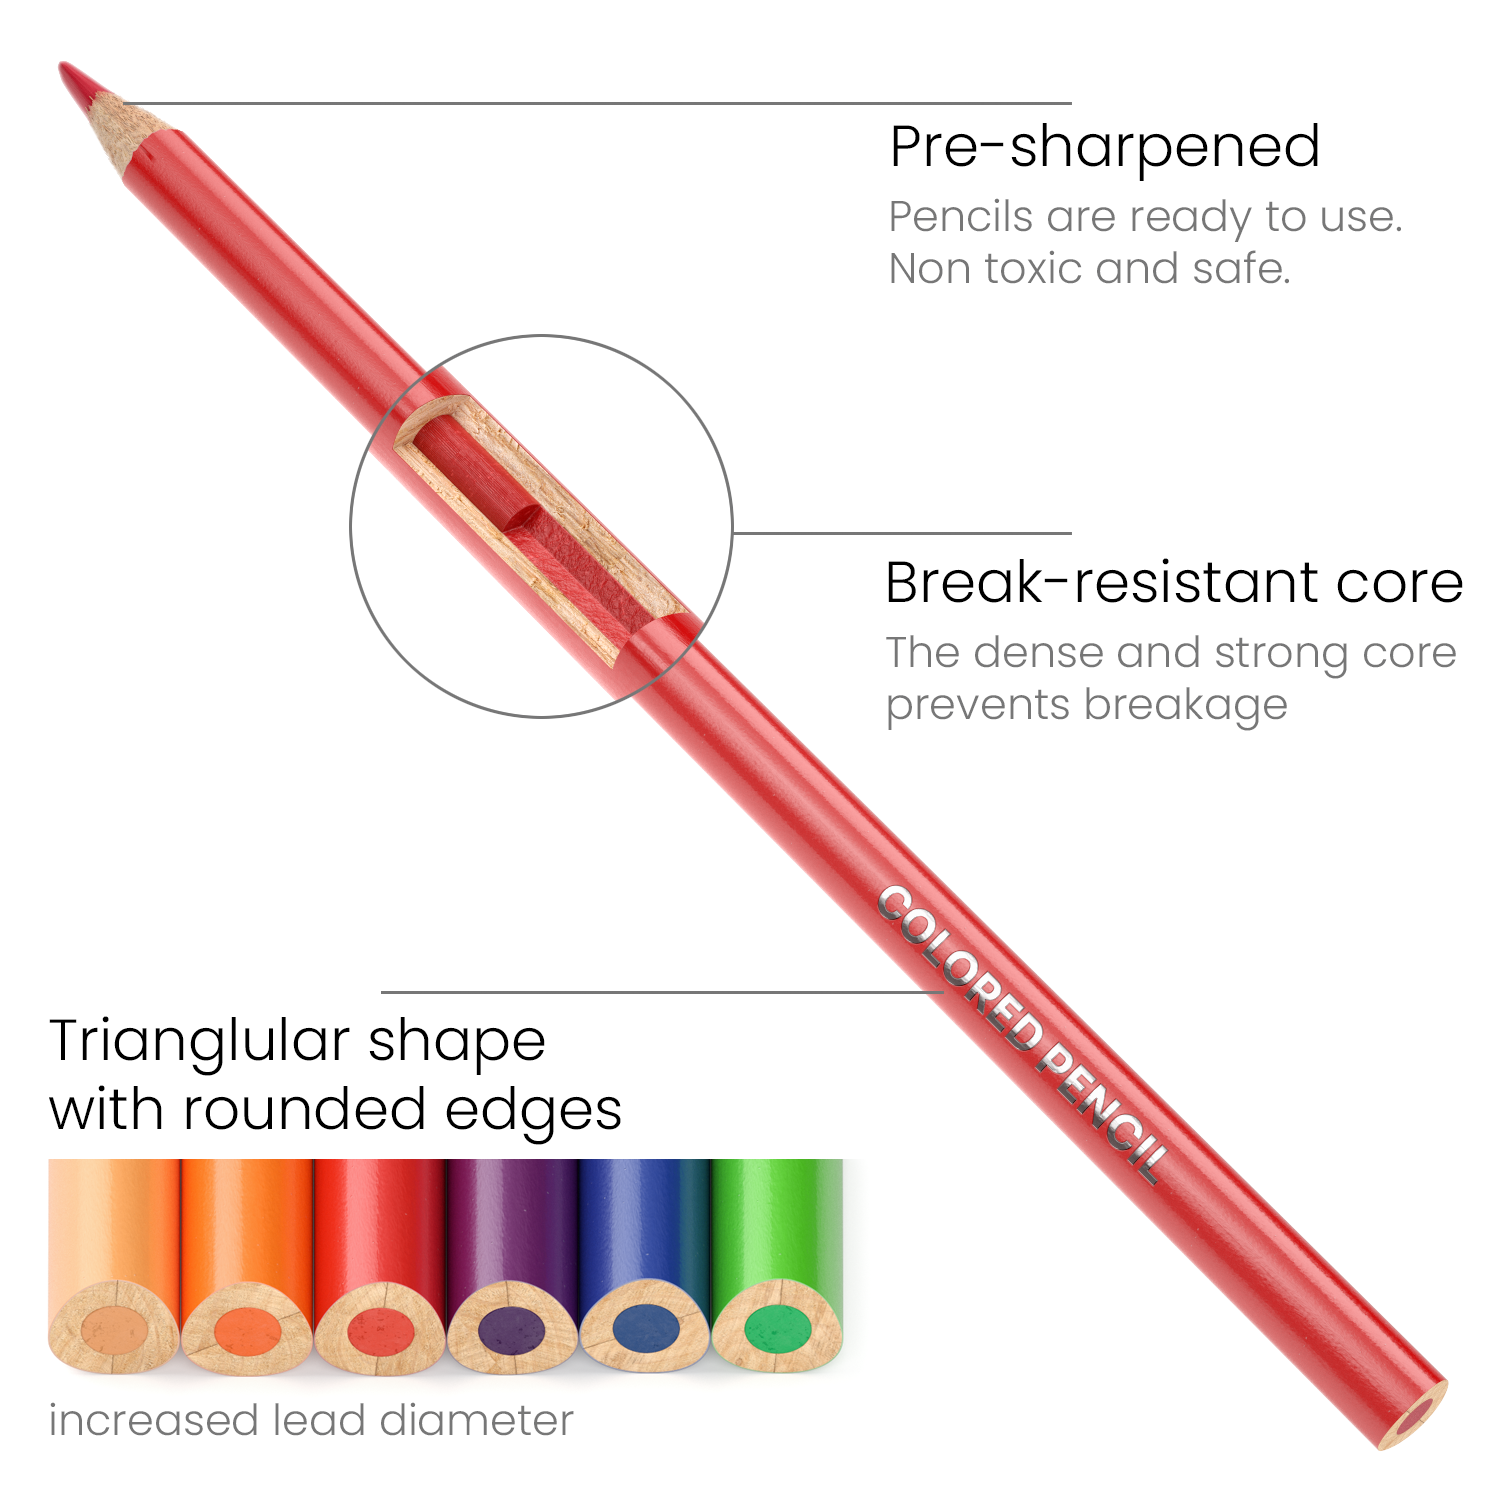 Arteza Professional Colored Pencils, Assorted Colors, Set for